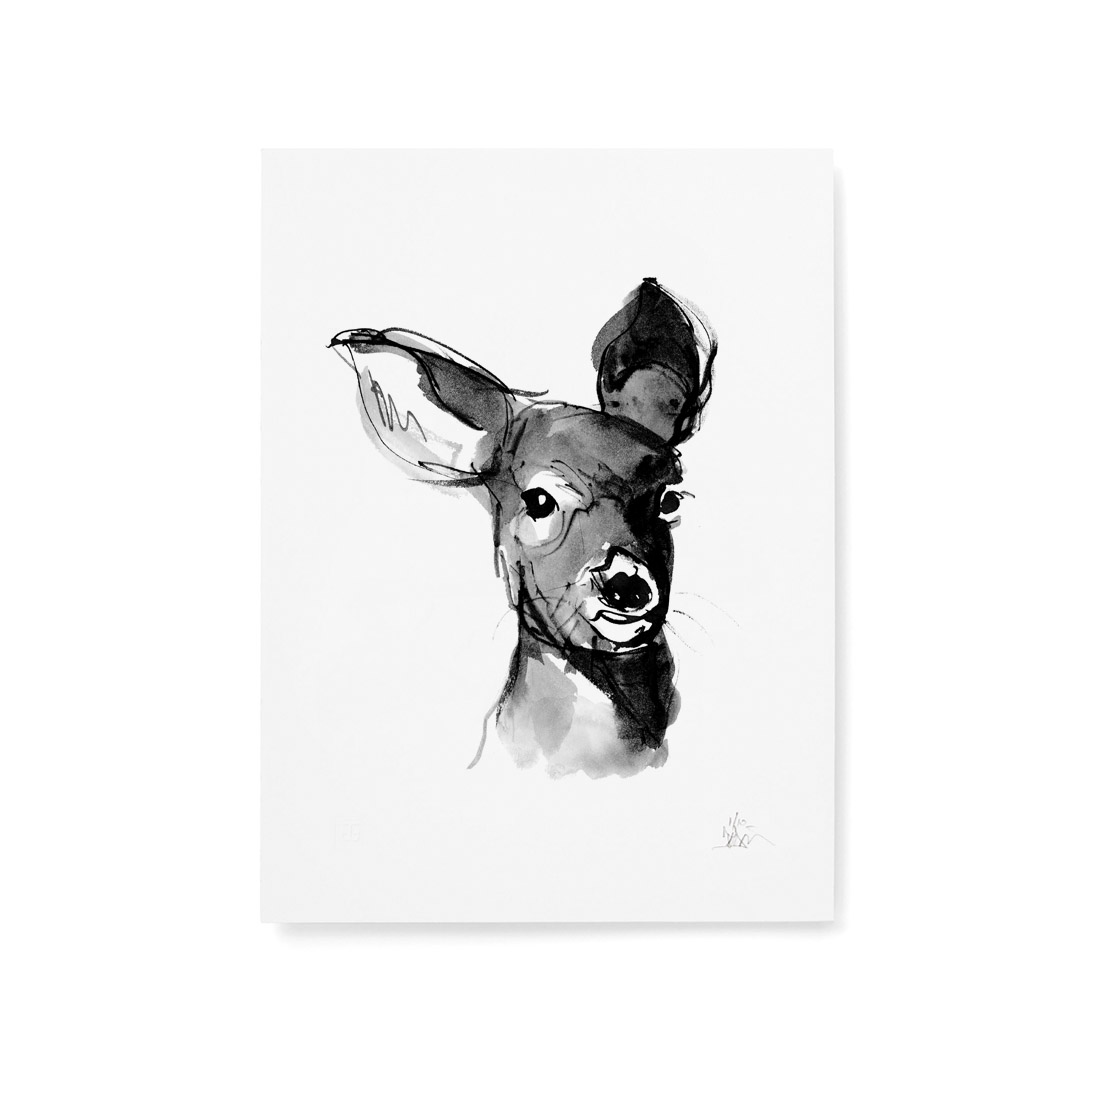 Charming deer fine art print